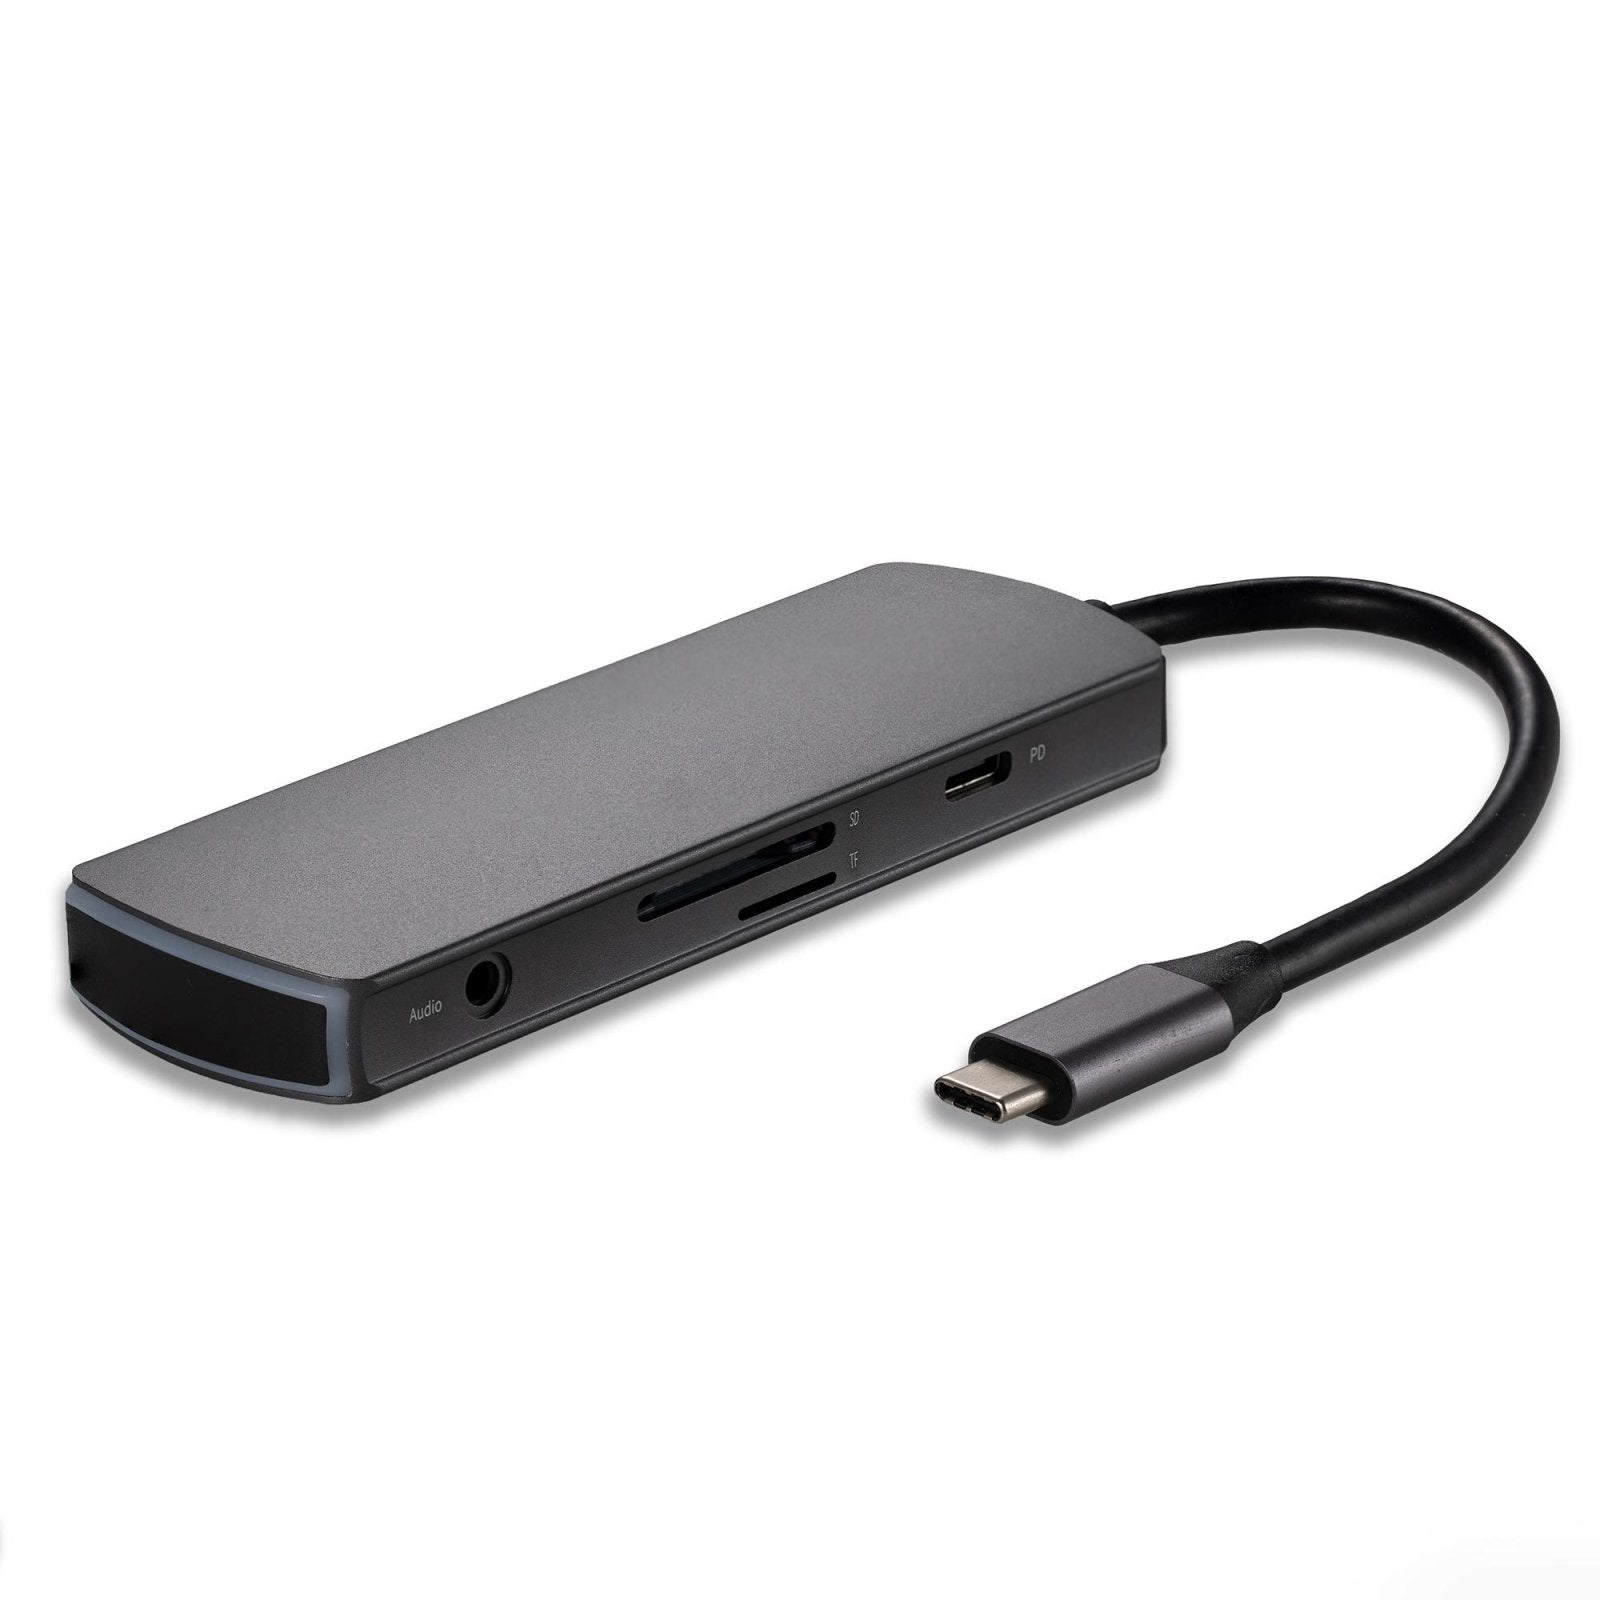 Headphone input and USB C Card reader